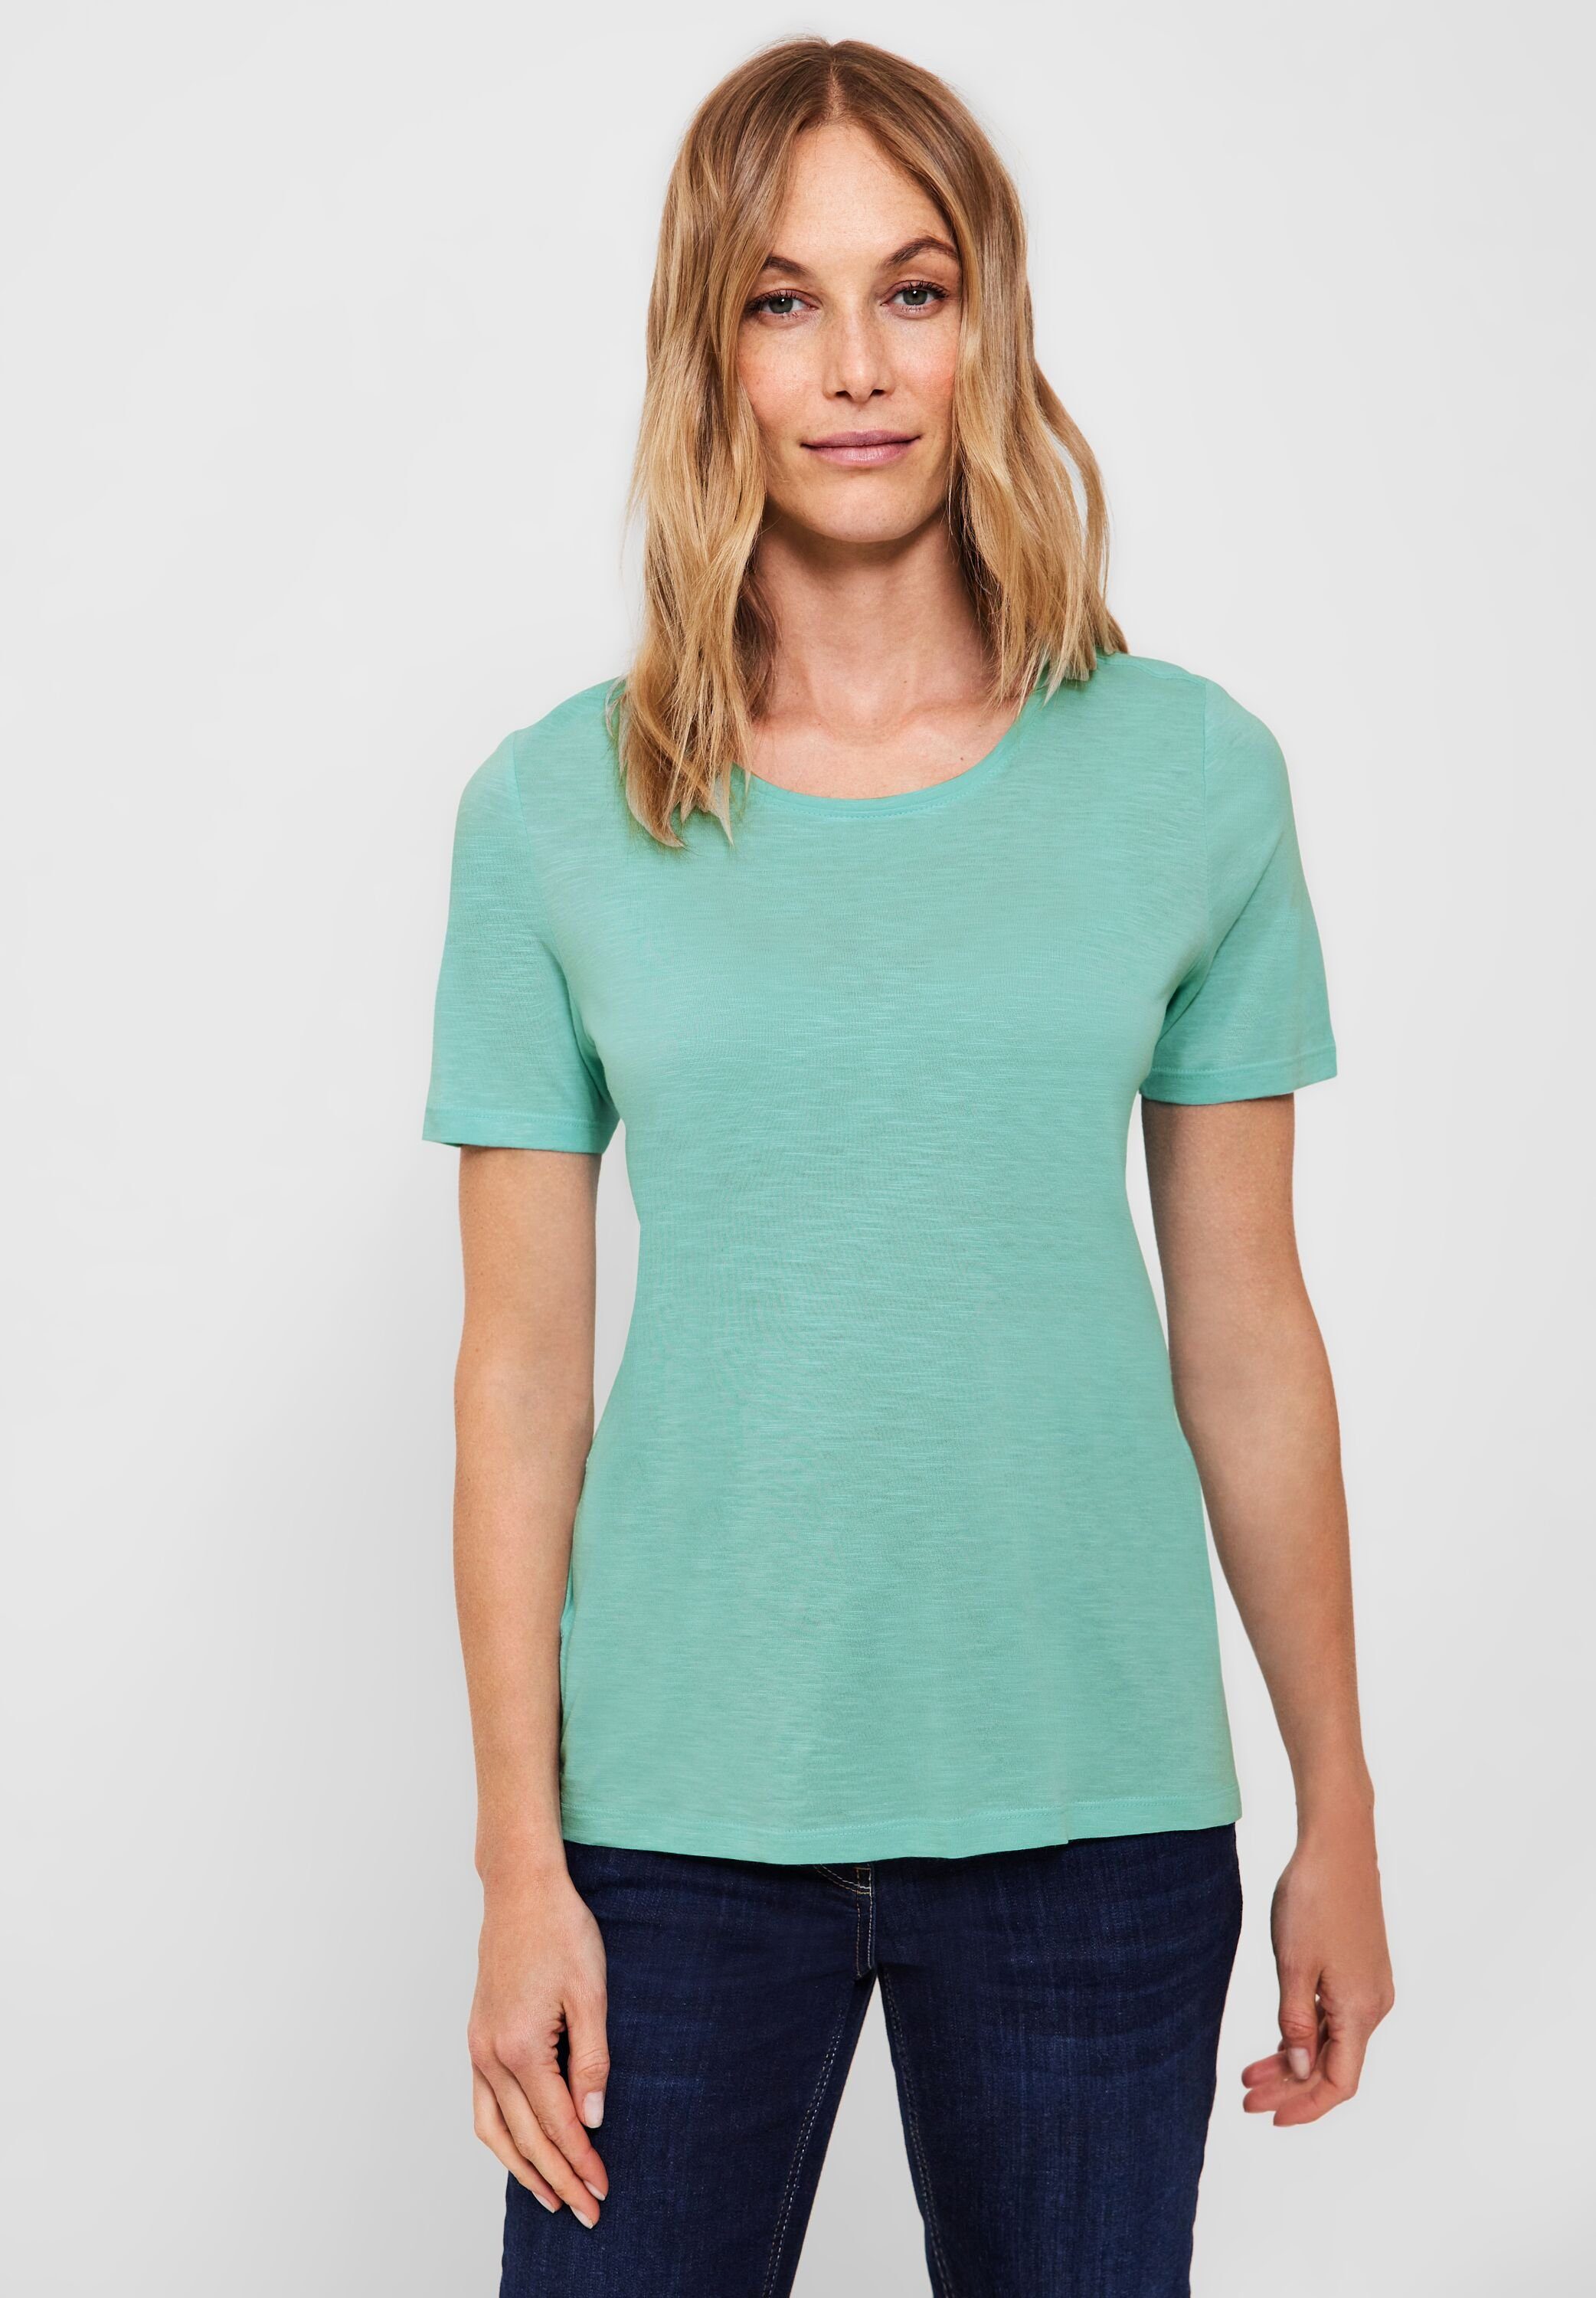 Baumwolle T-Shirt green cool aus reiner mint Cecil